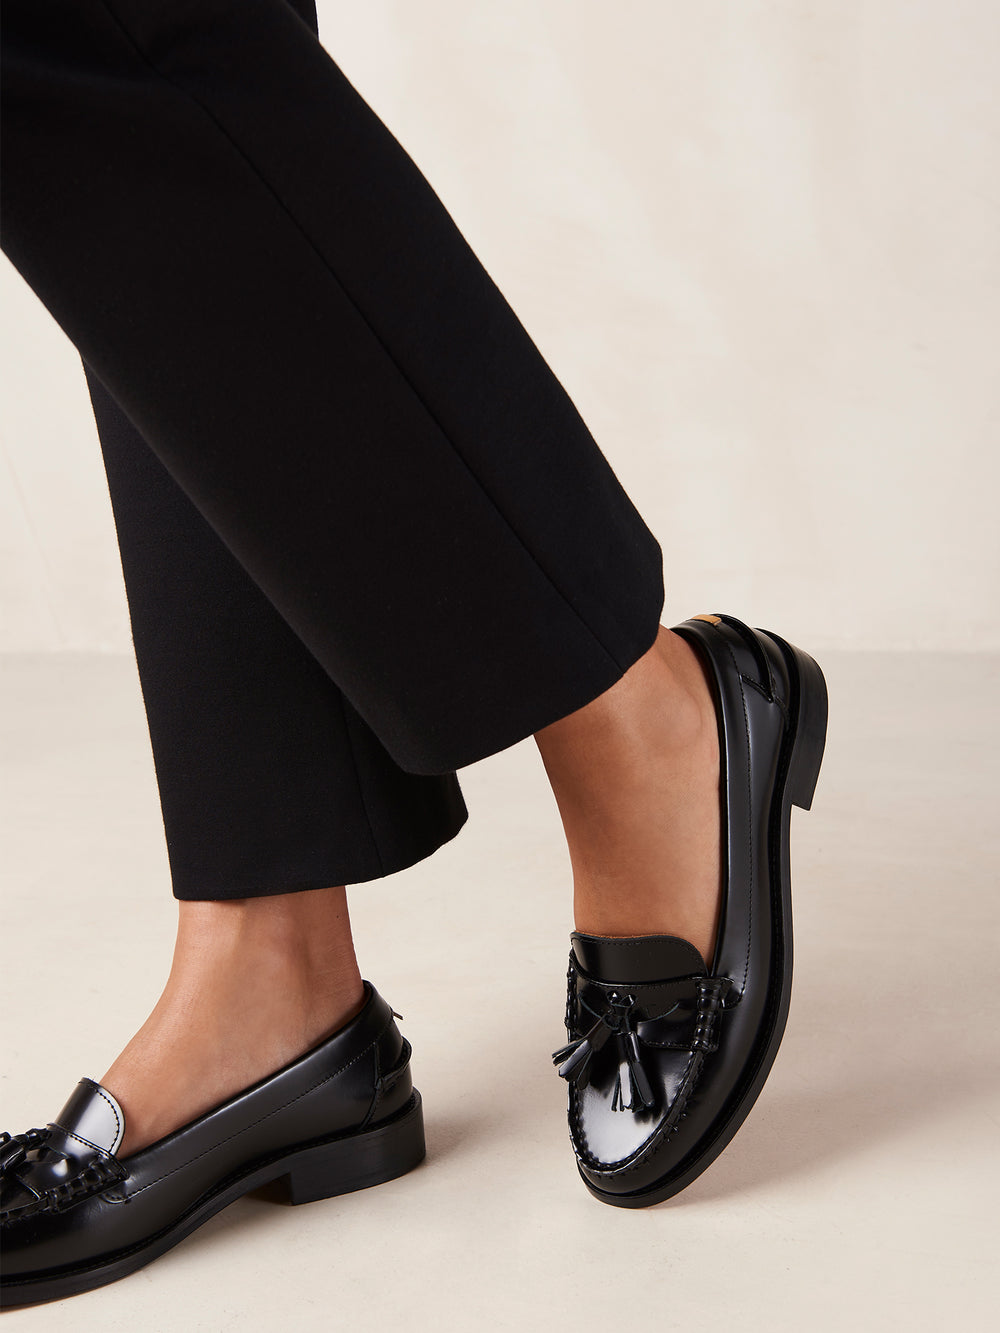 Terrane Black Leather Loafers - Black